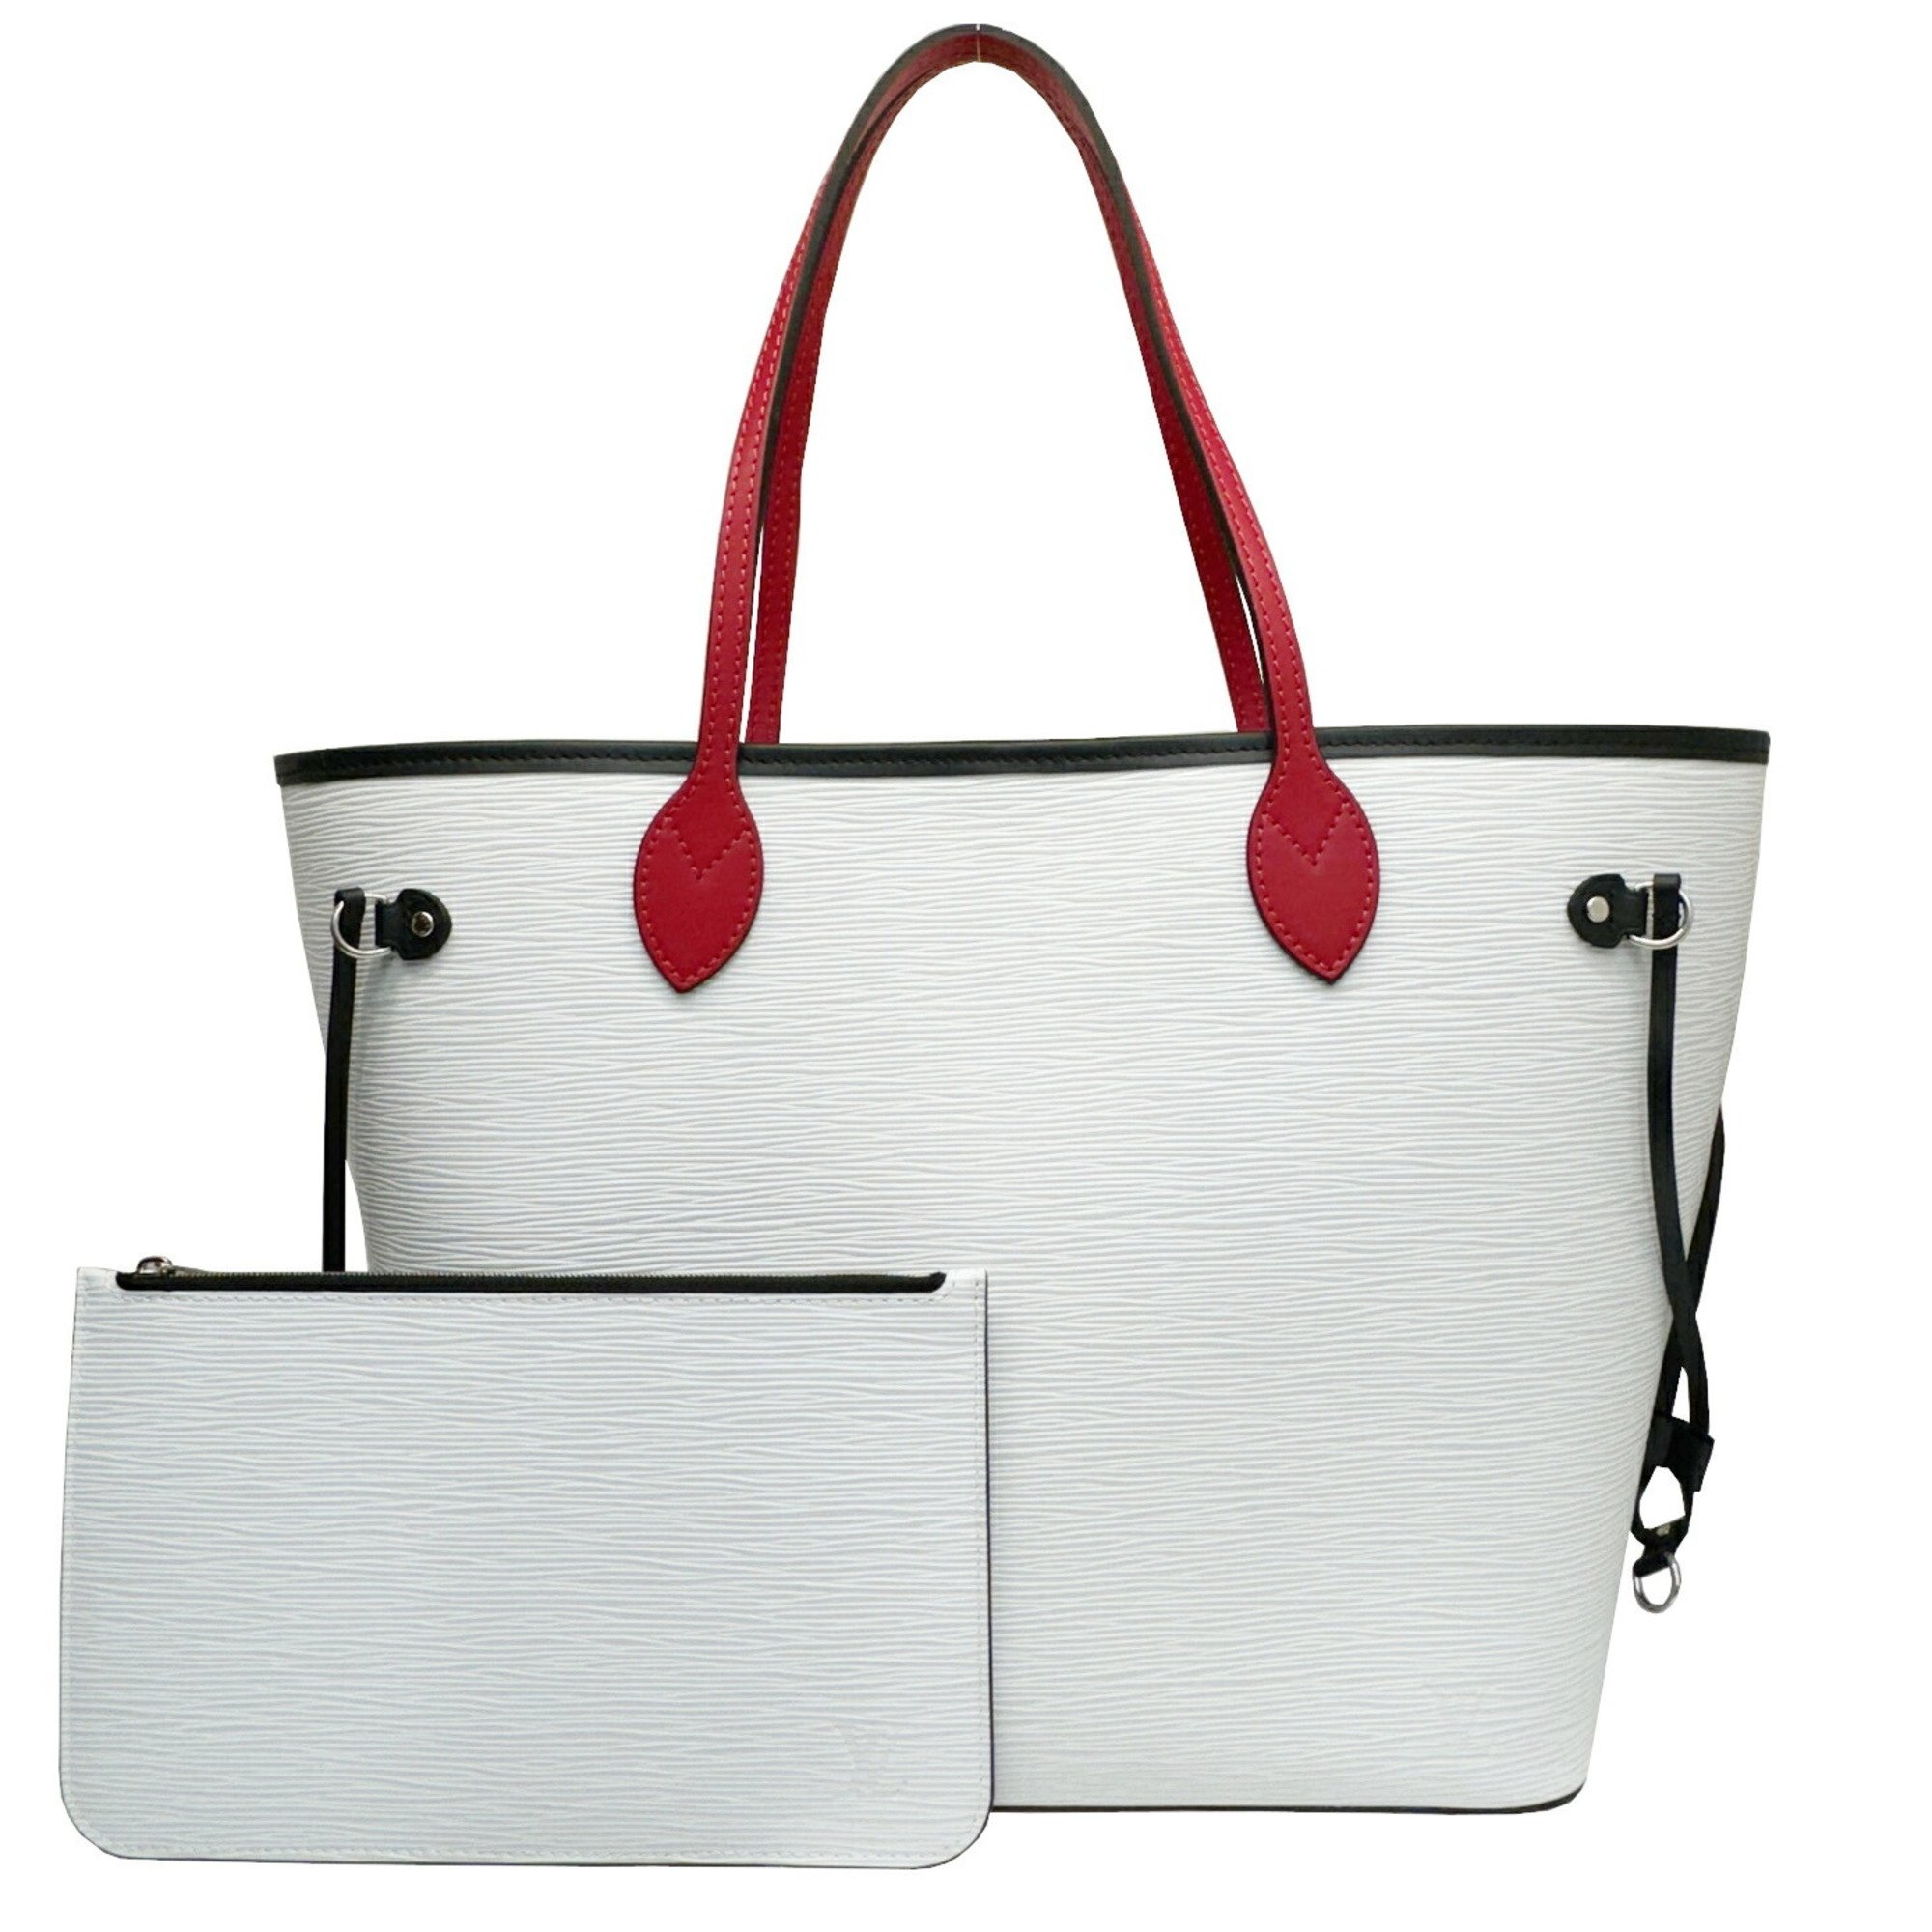 LOUIS VUITTON Neverfull MM M55591 UB0250 Tote Bag Shoulder Epi Leather Blond Optique White Red Black Ladies